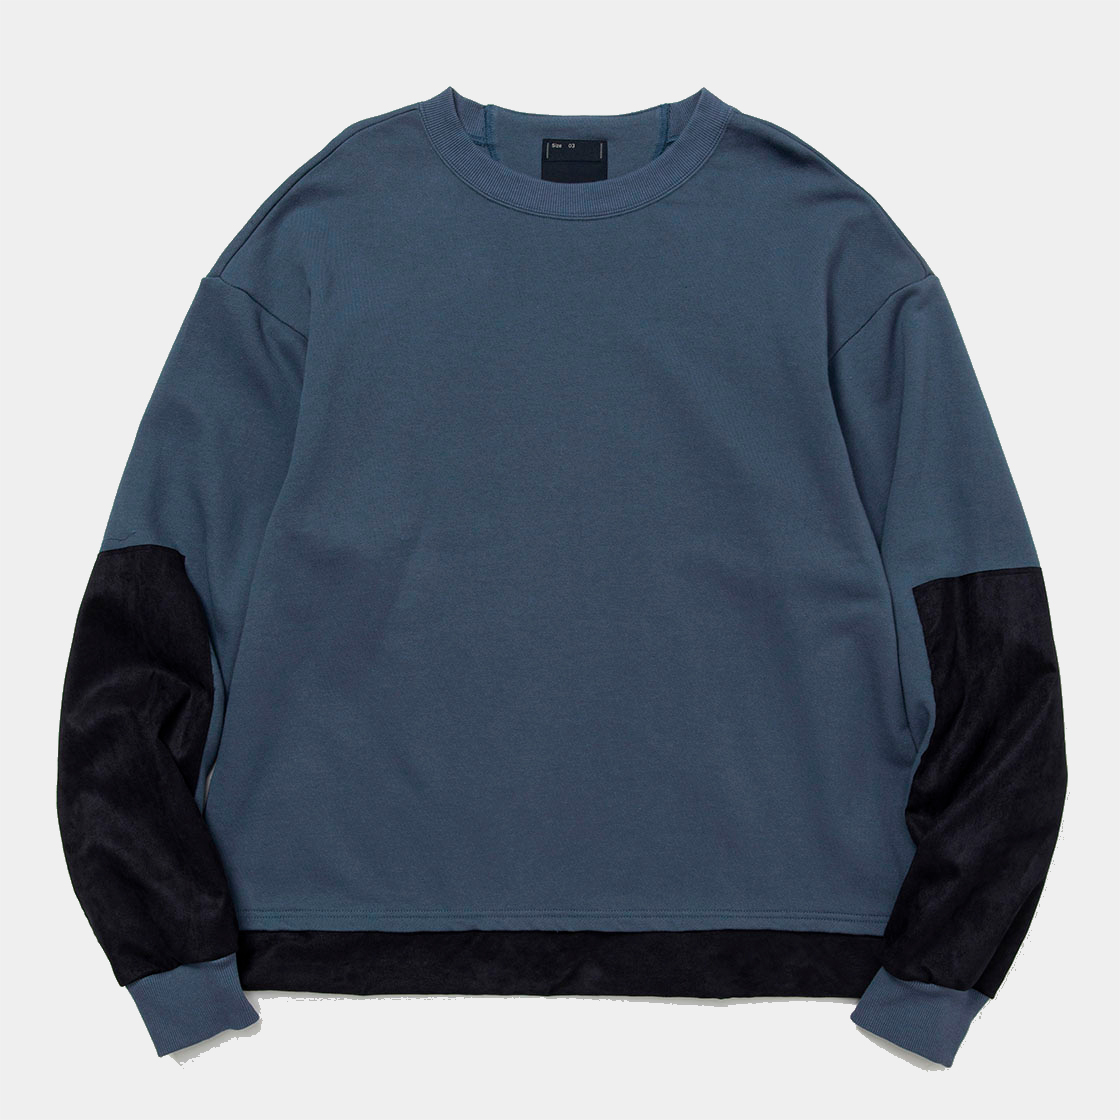 Imitation Suede Sweatshirt / Blue Grey